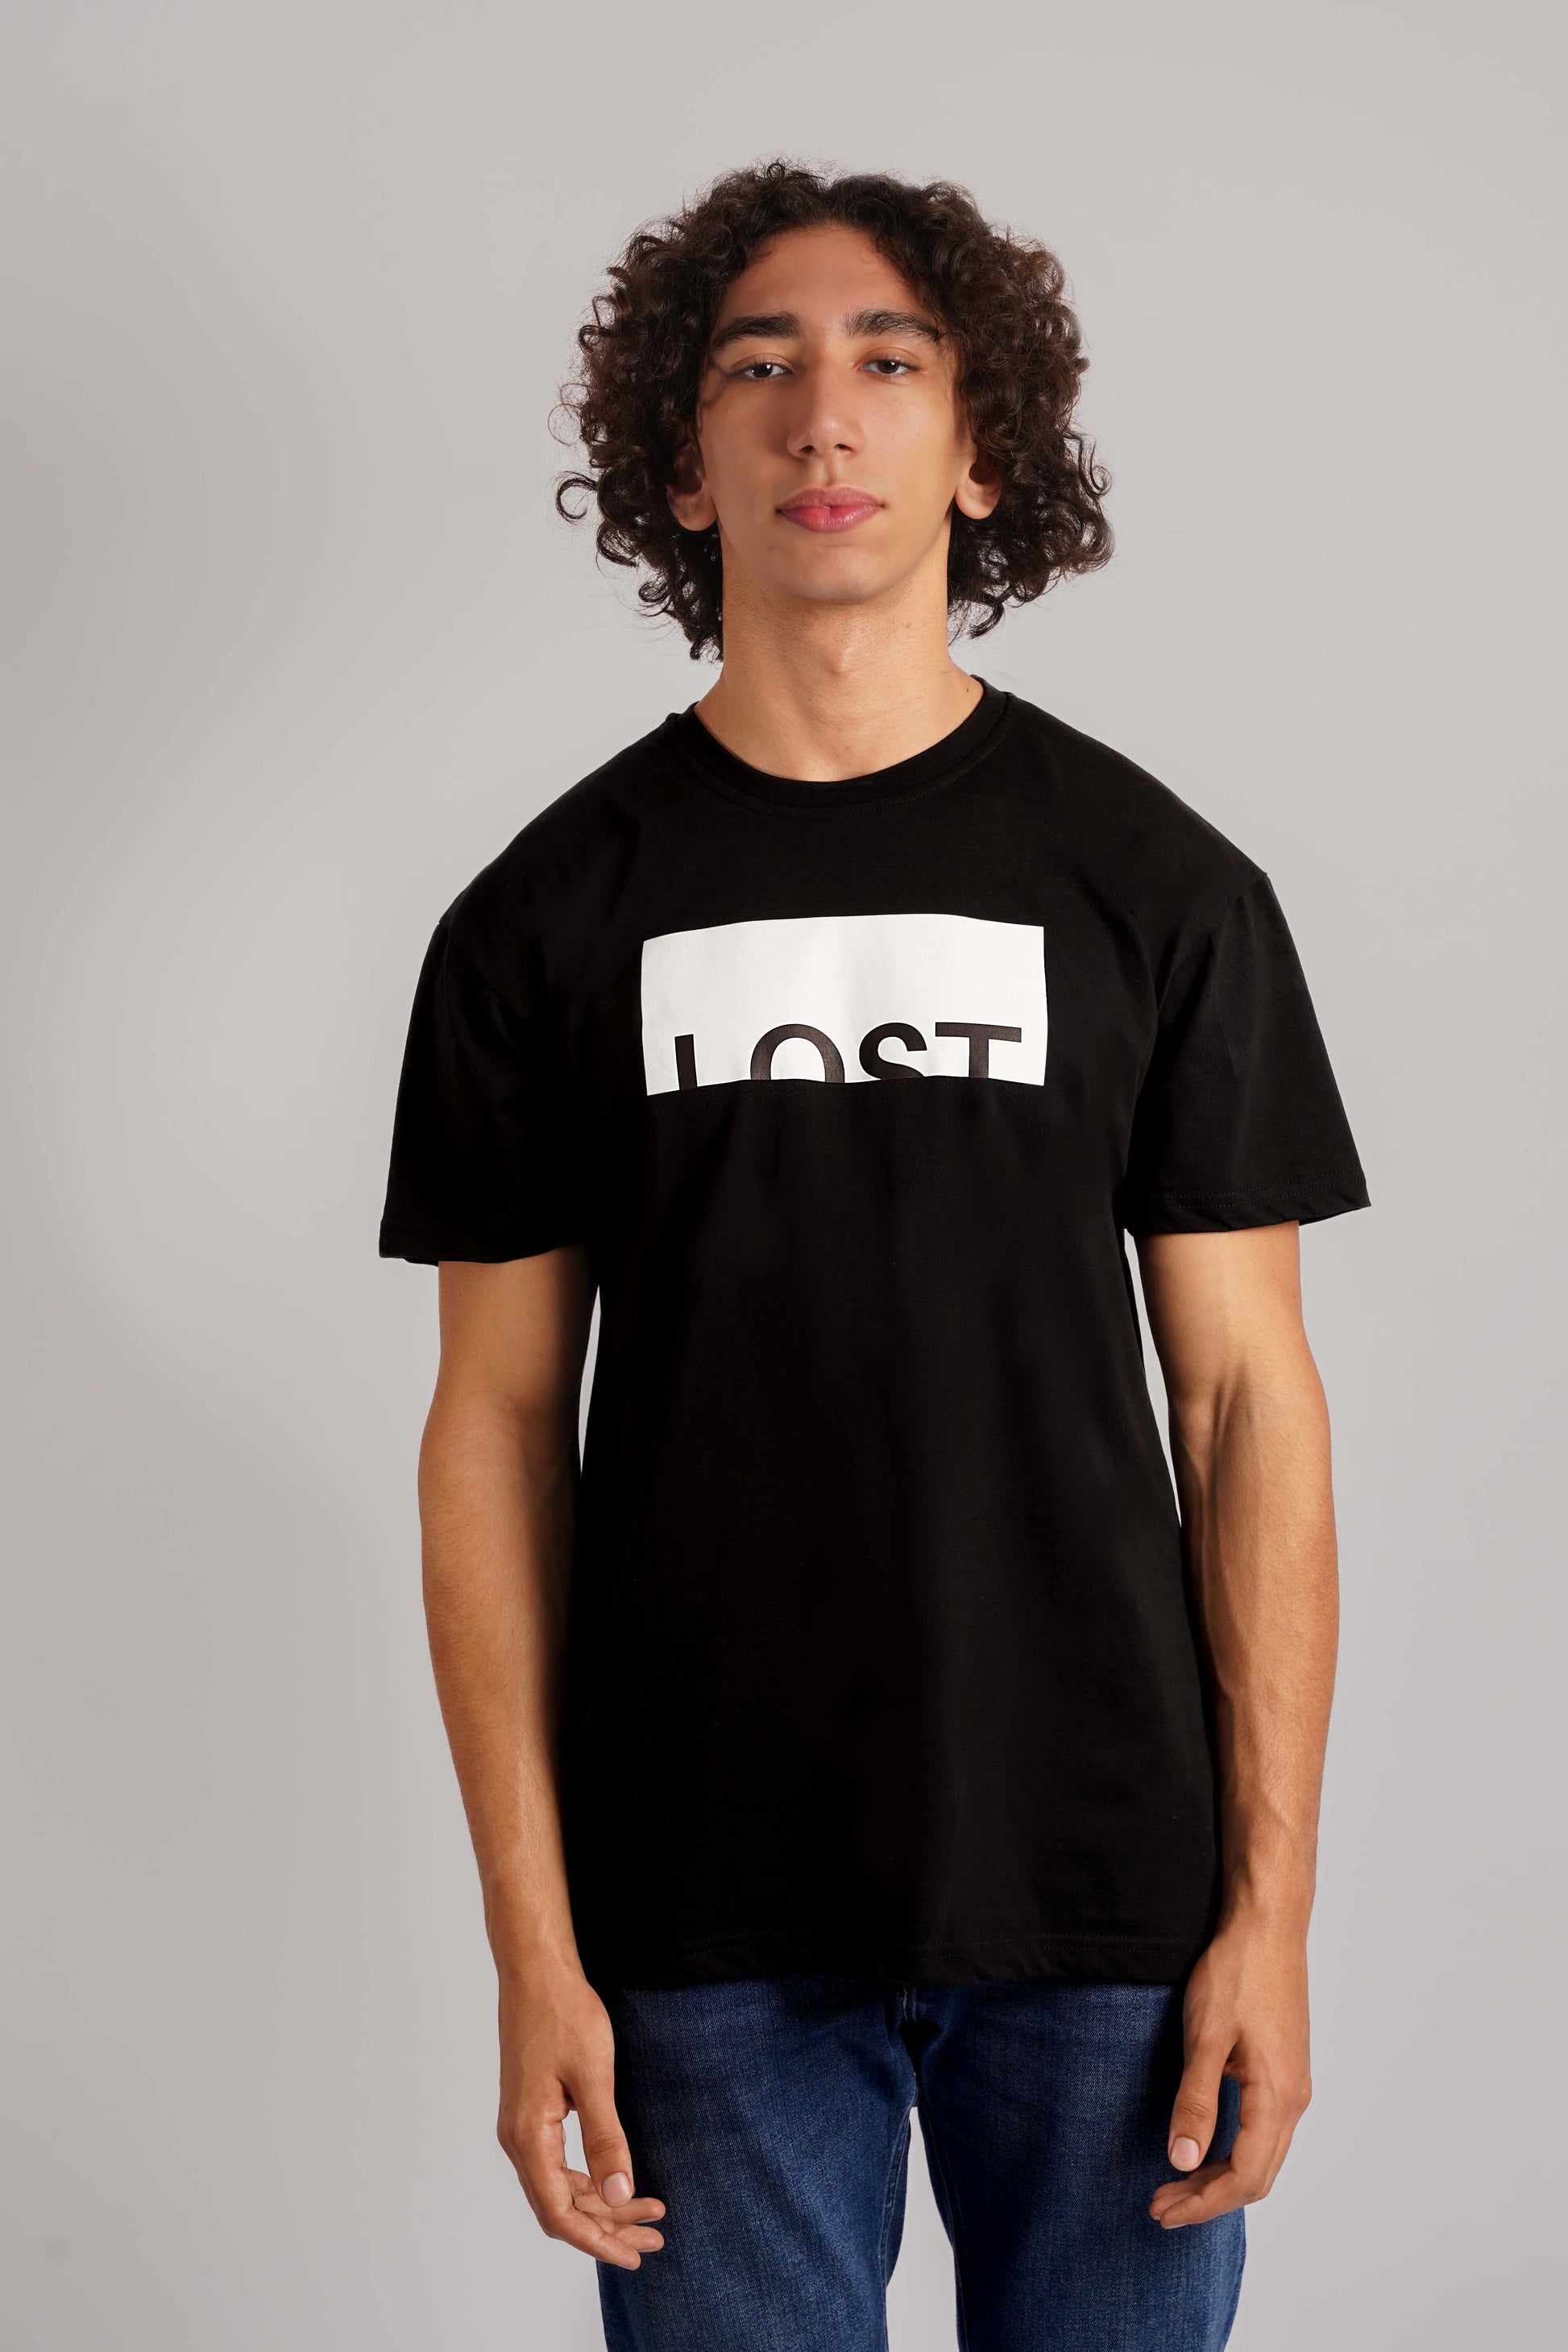 Lost T-Shirt Black Men